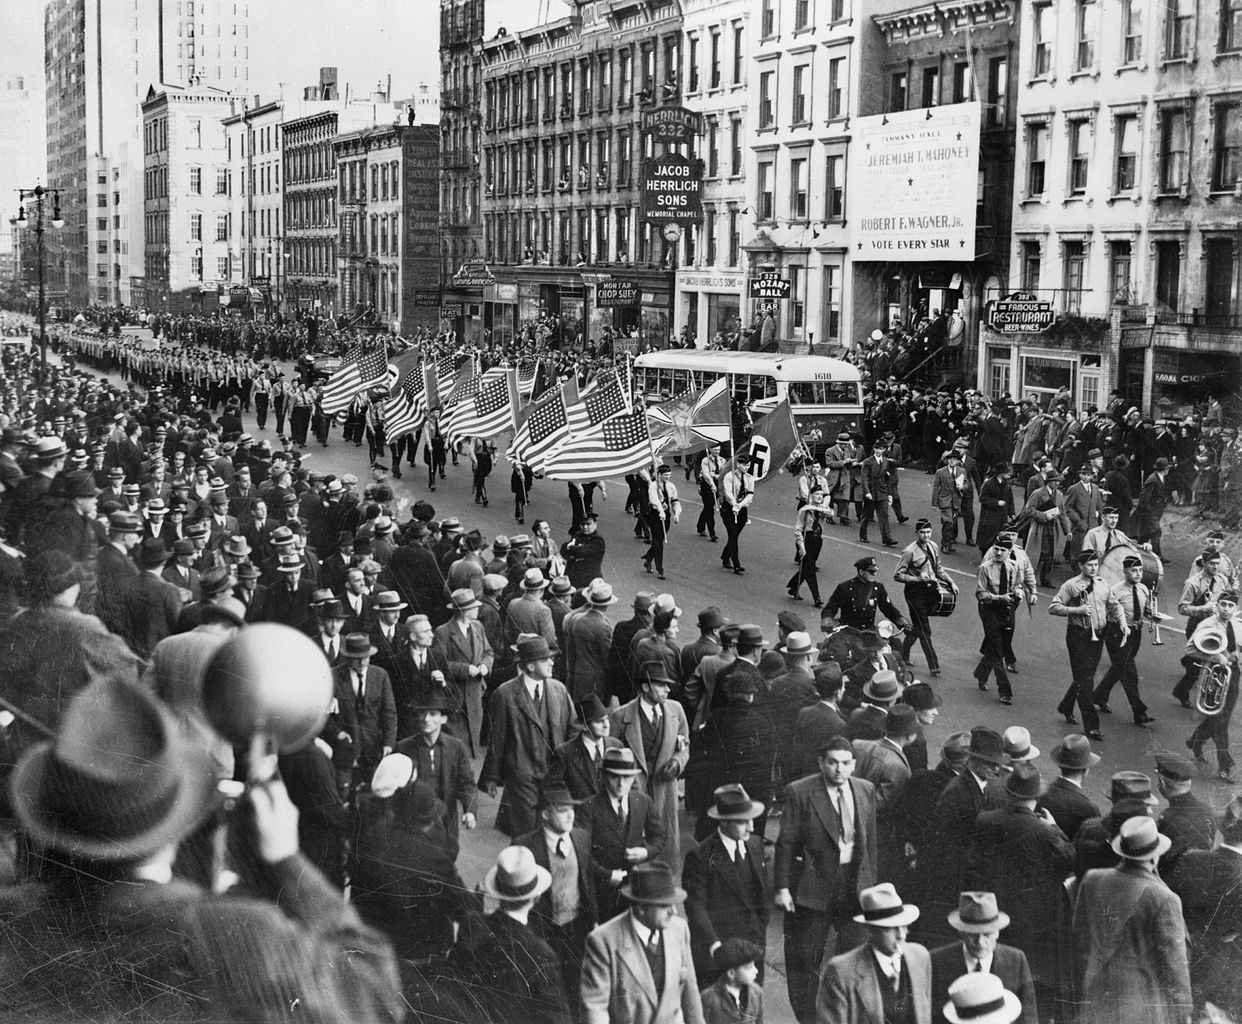 German American Bund parade in New York City, October 30, 1939.